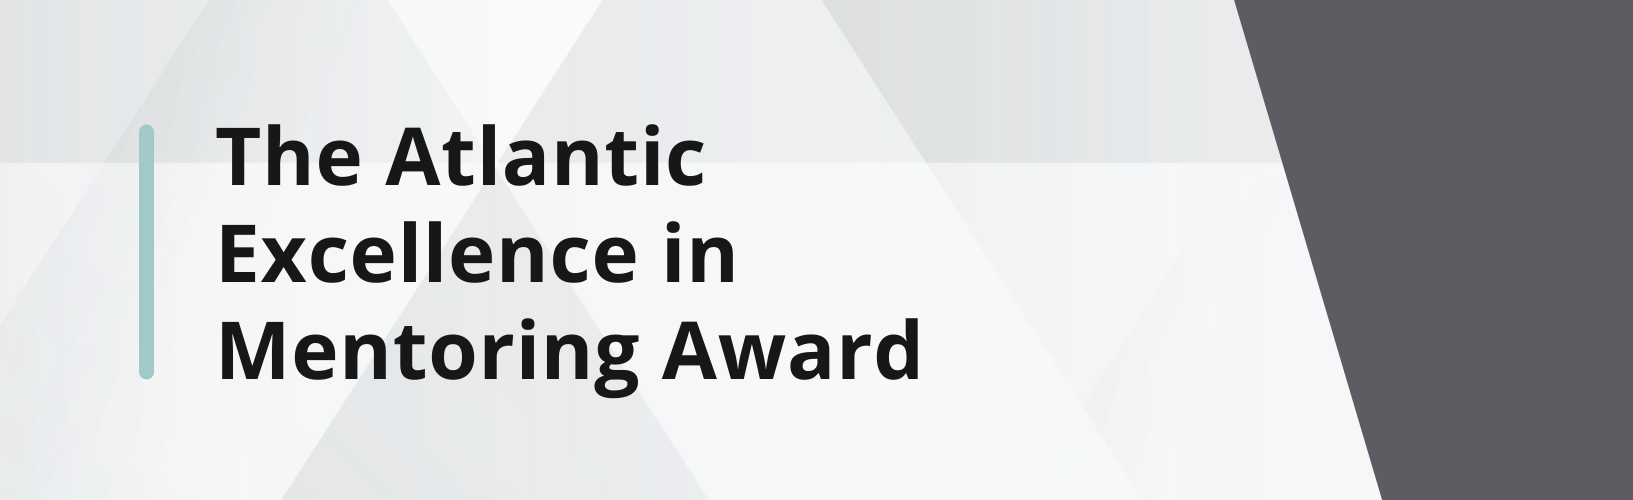 The Atlantic Excellence in Mentoring Award